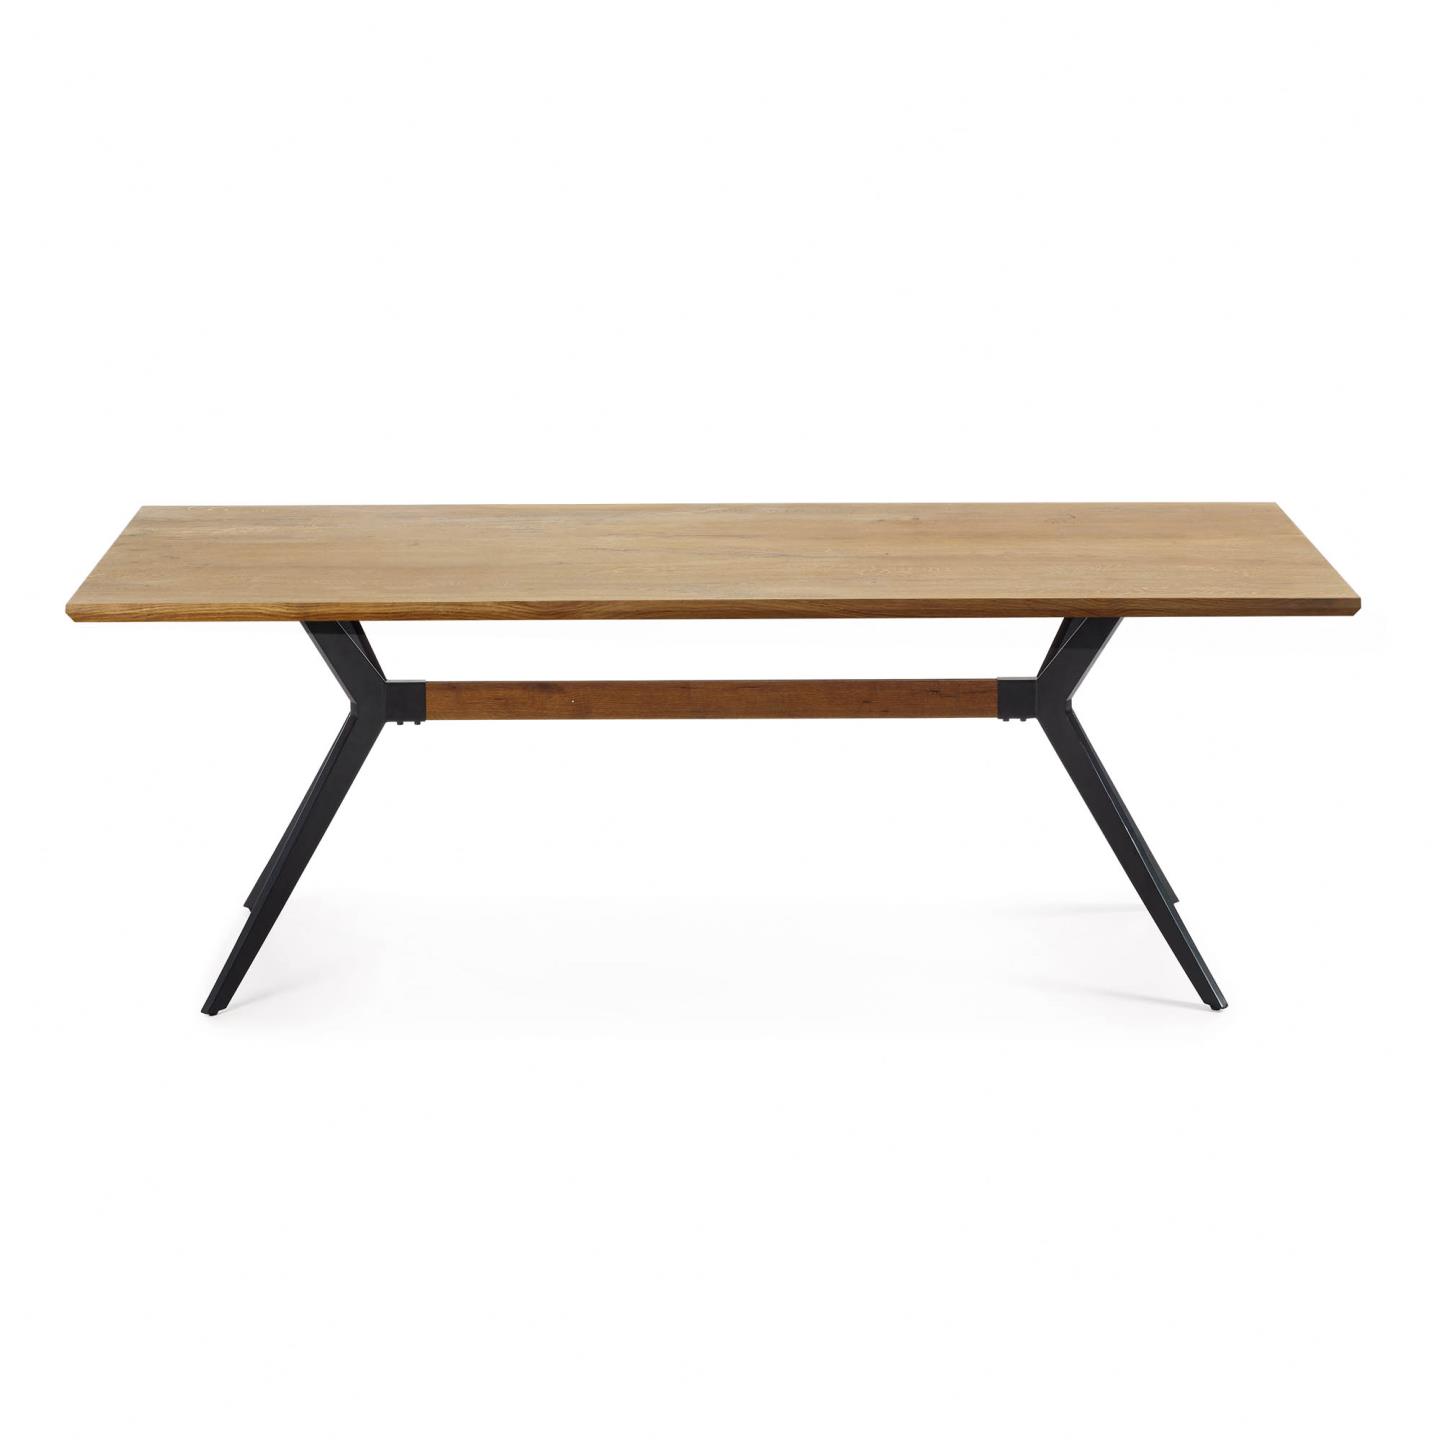 AMETHYST Table 160x90 cm aged wood steel legs